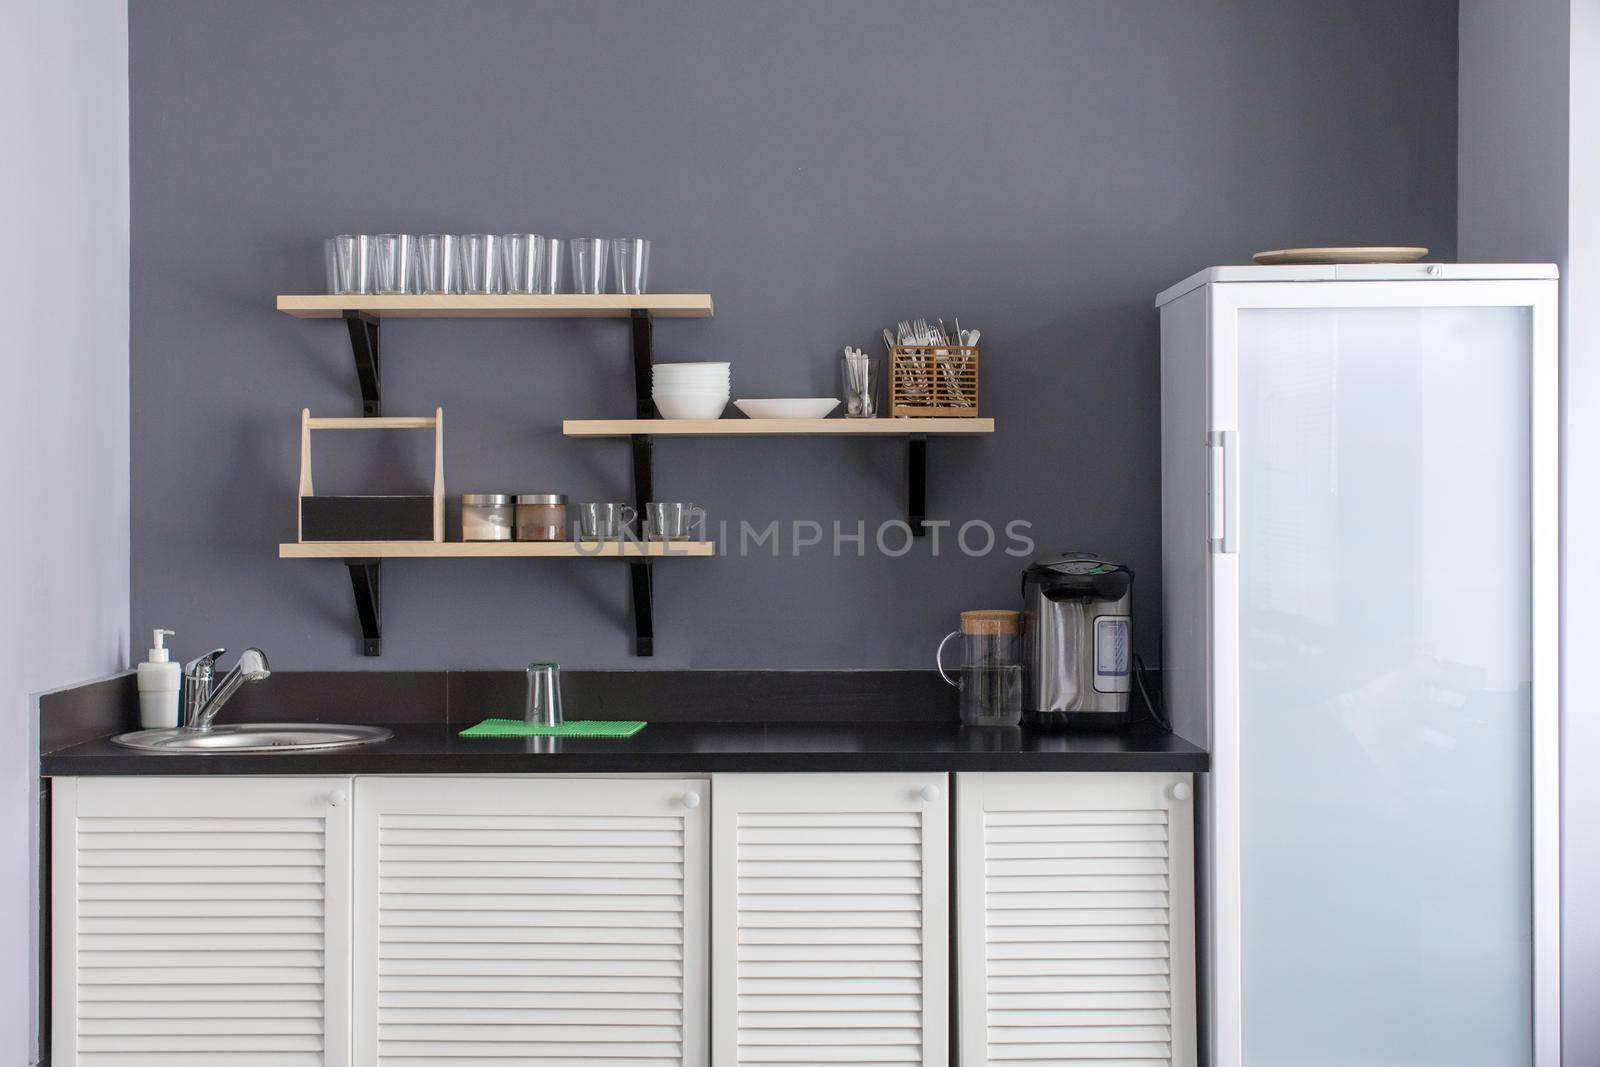 Stylish kitchen interior by Demkat